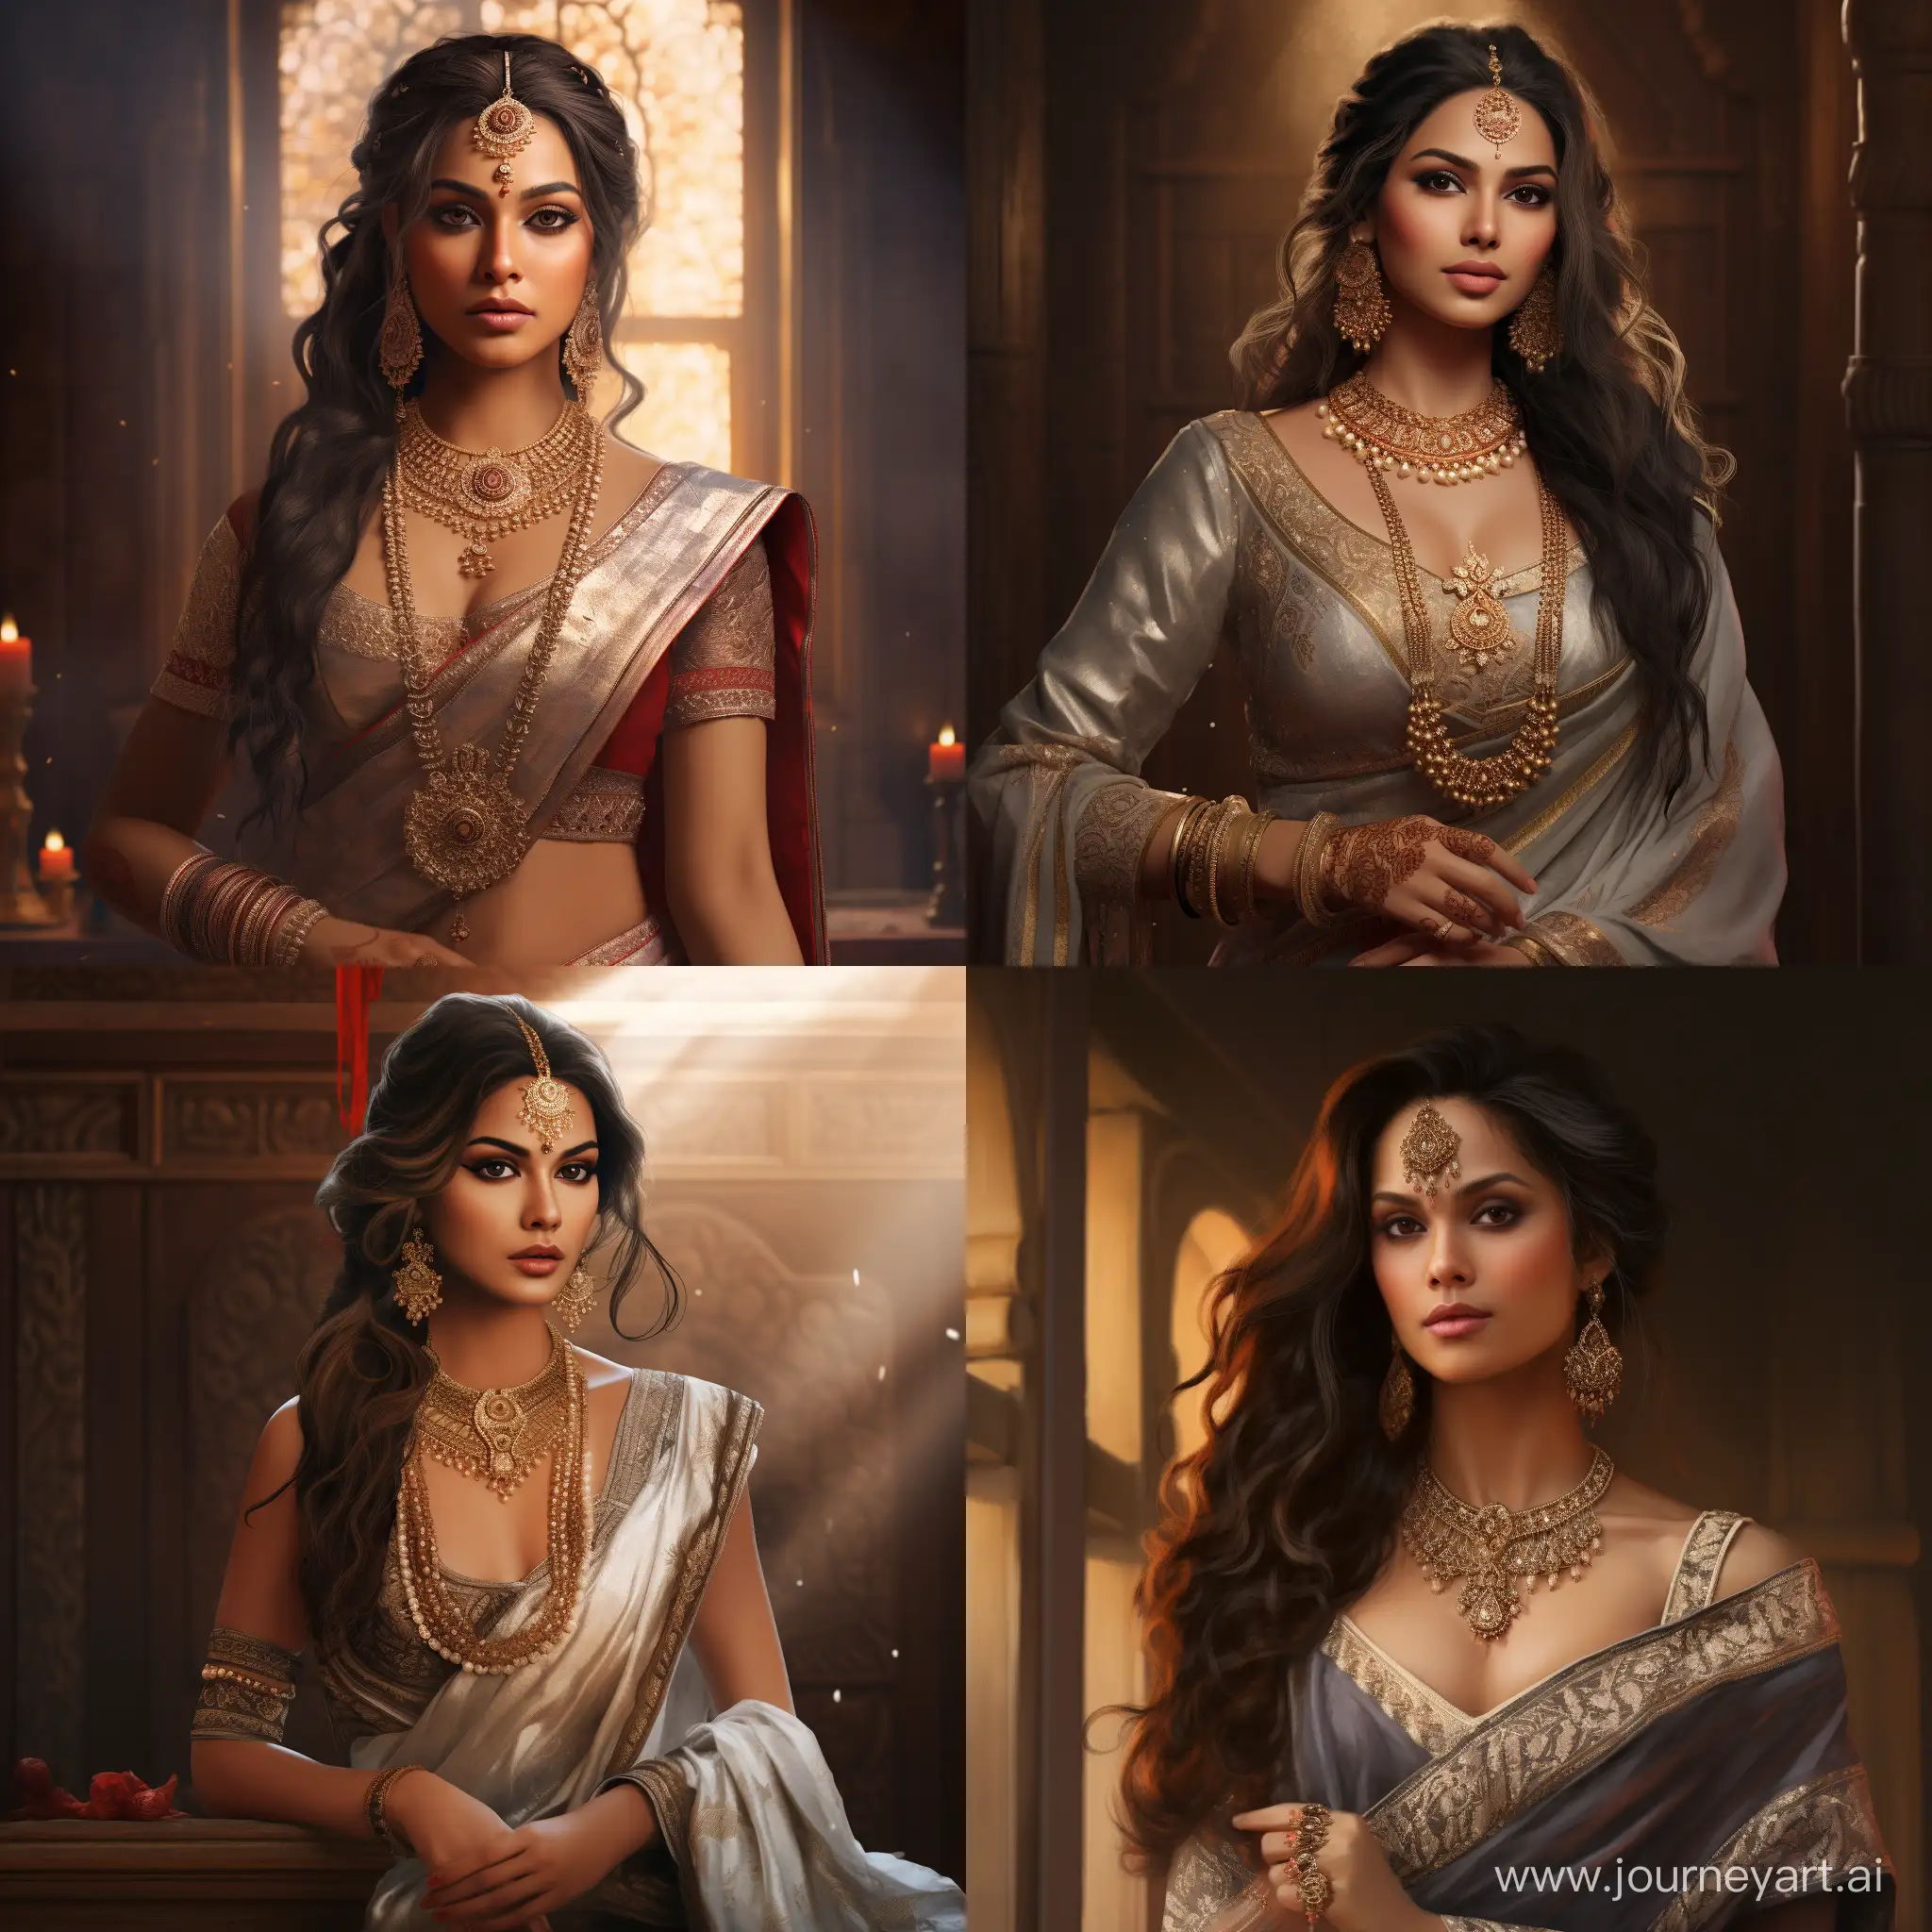 Elegant Indian goddess full view, realistic digital illustration